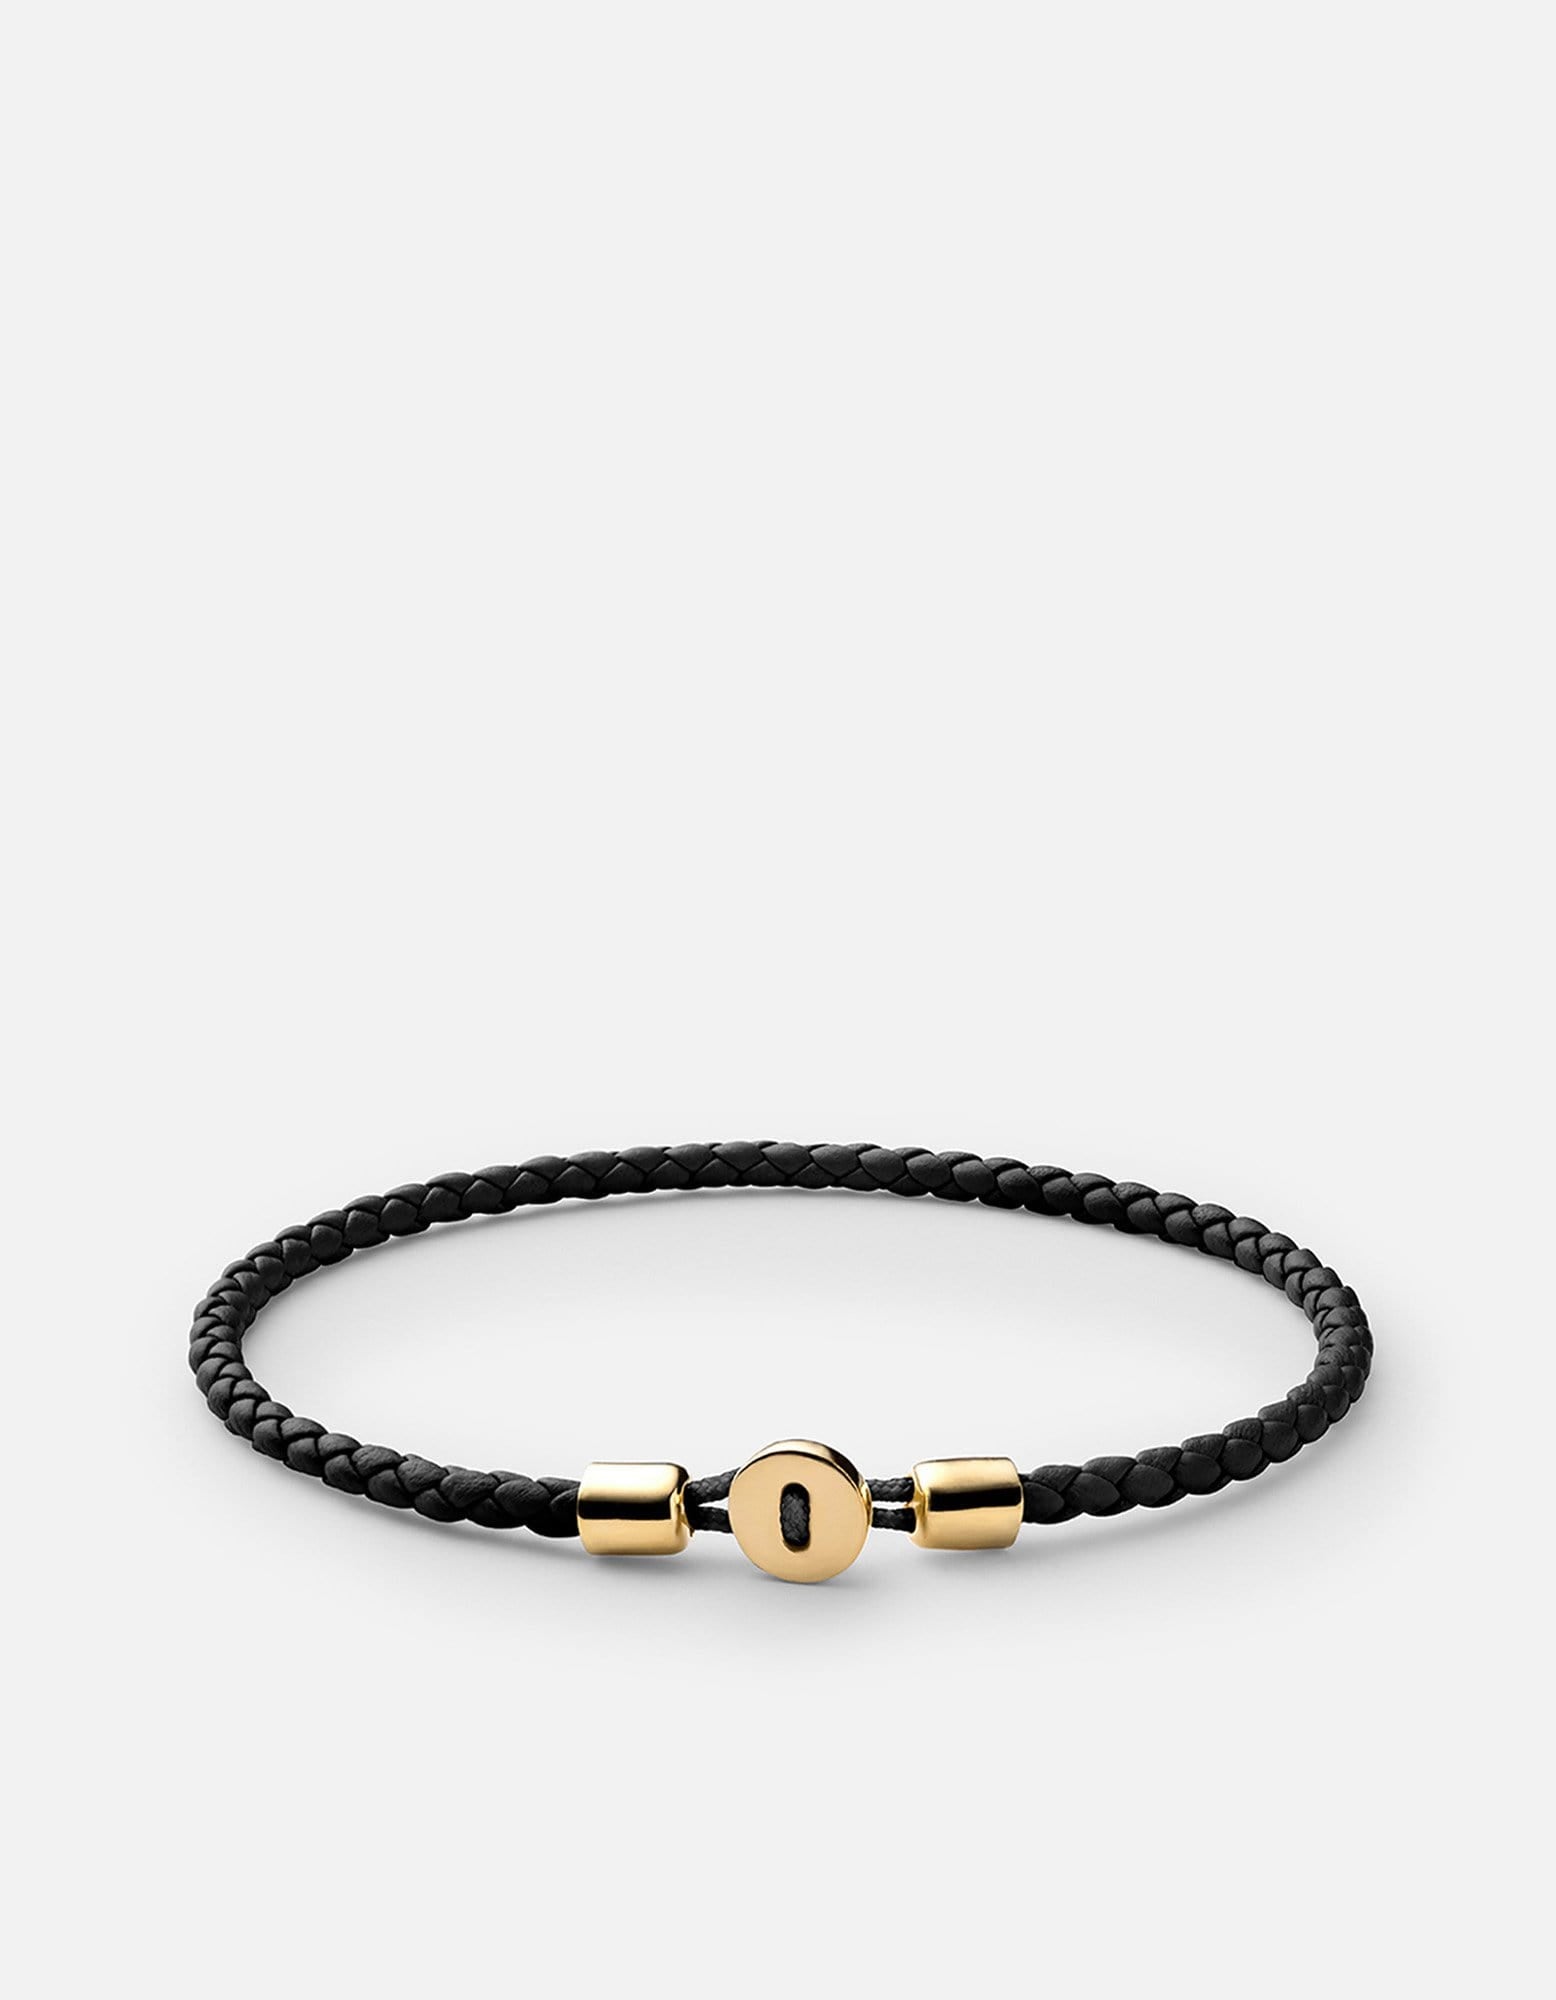 Matt black bracelet with rope effect in golden -